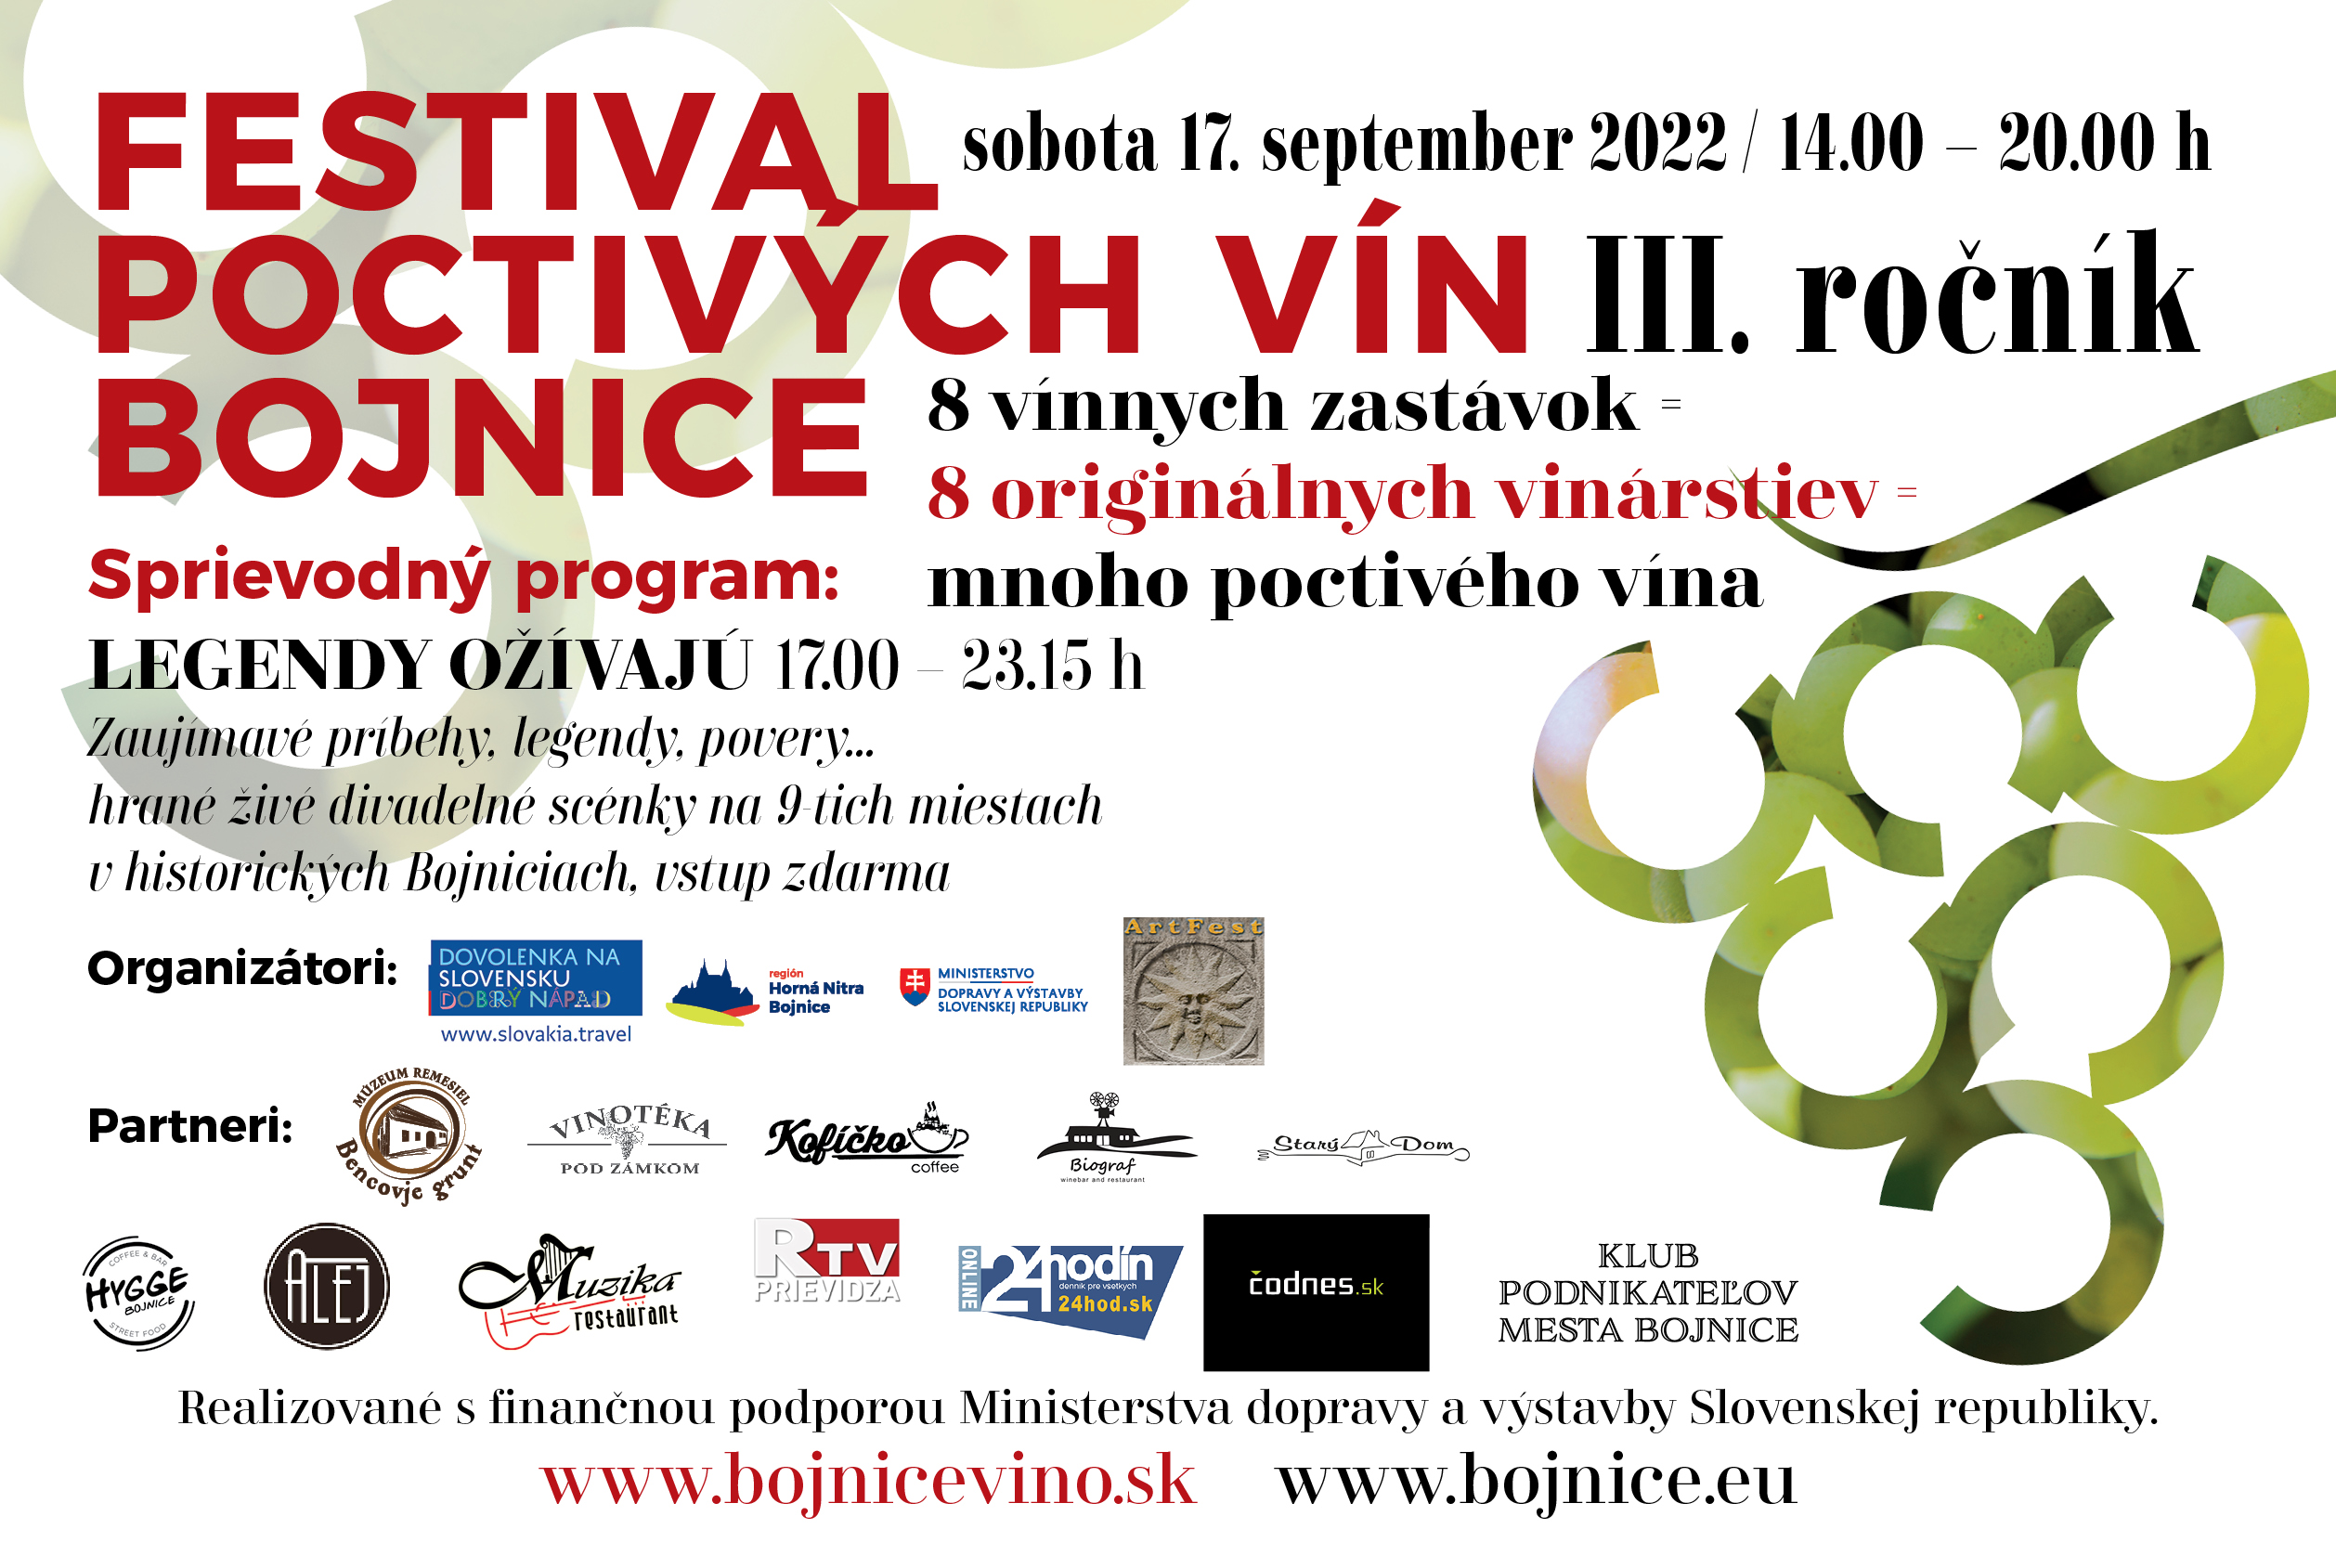 Bojnick festival poctivch vn 2022